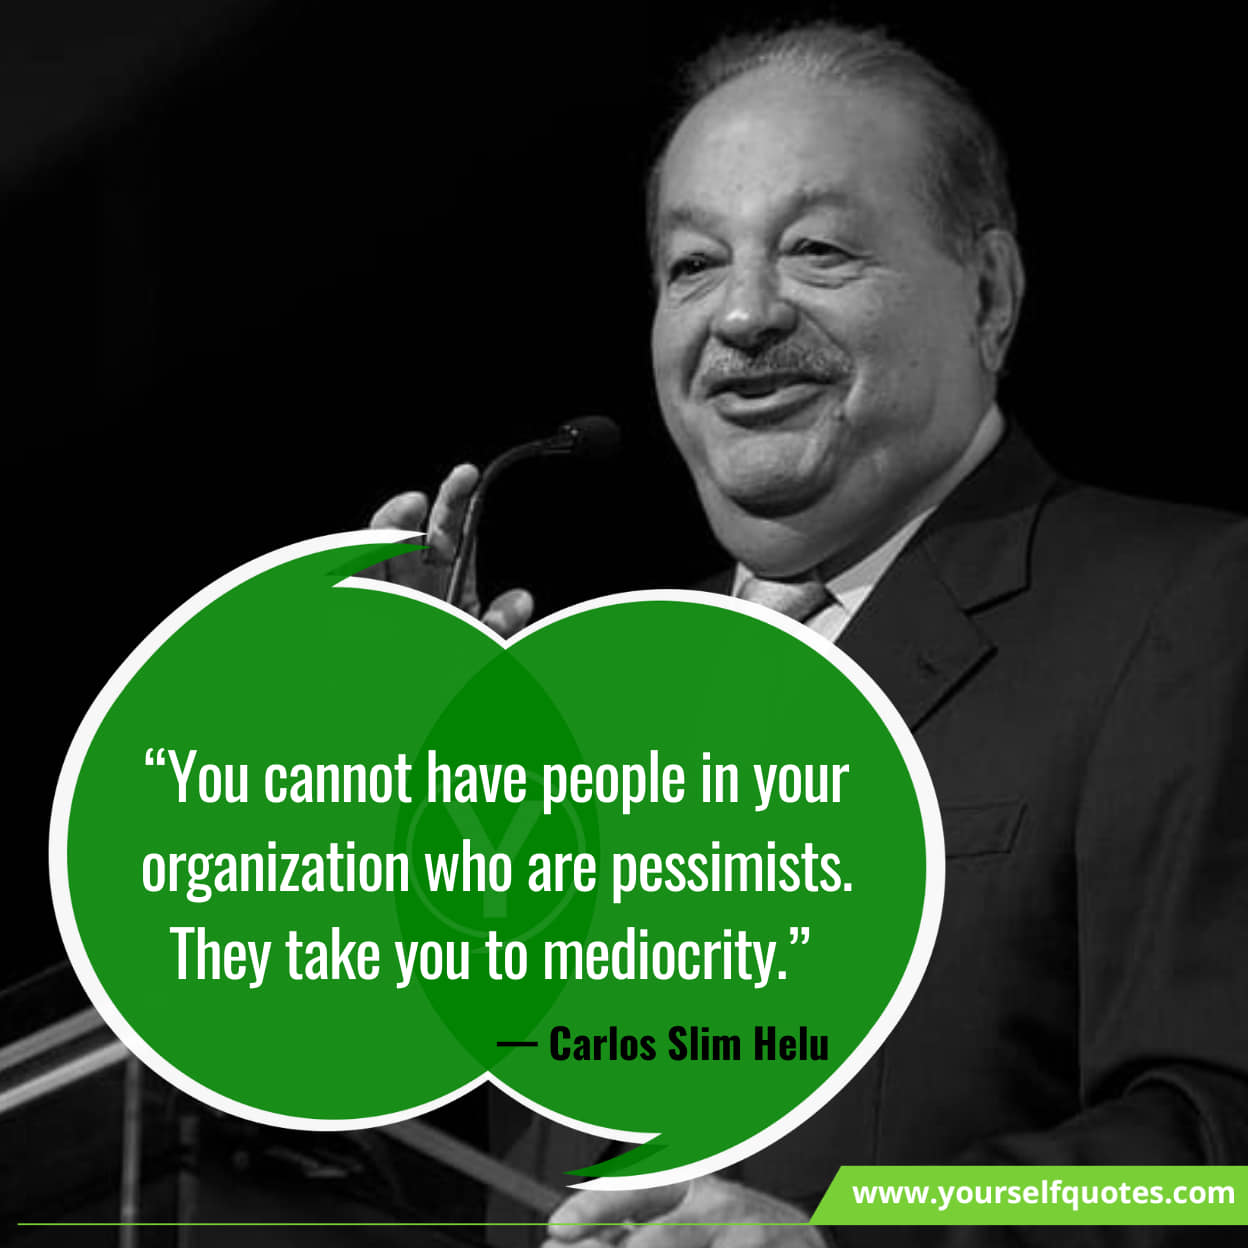 Inspirational Carlos Slim Helu Quotes